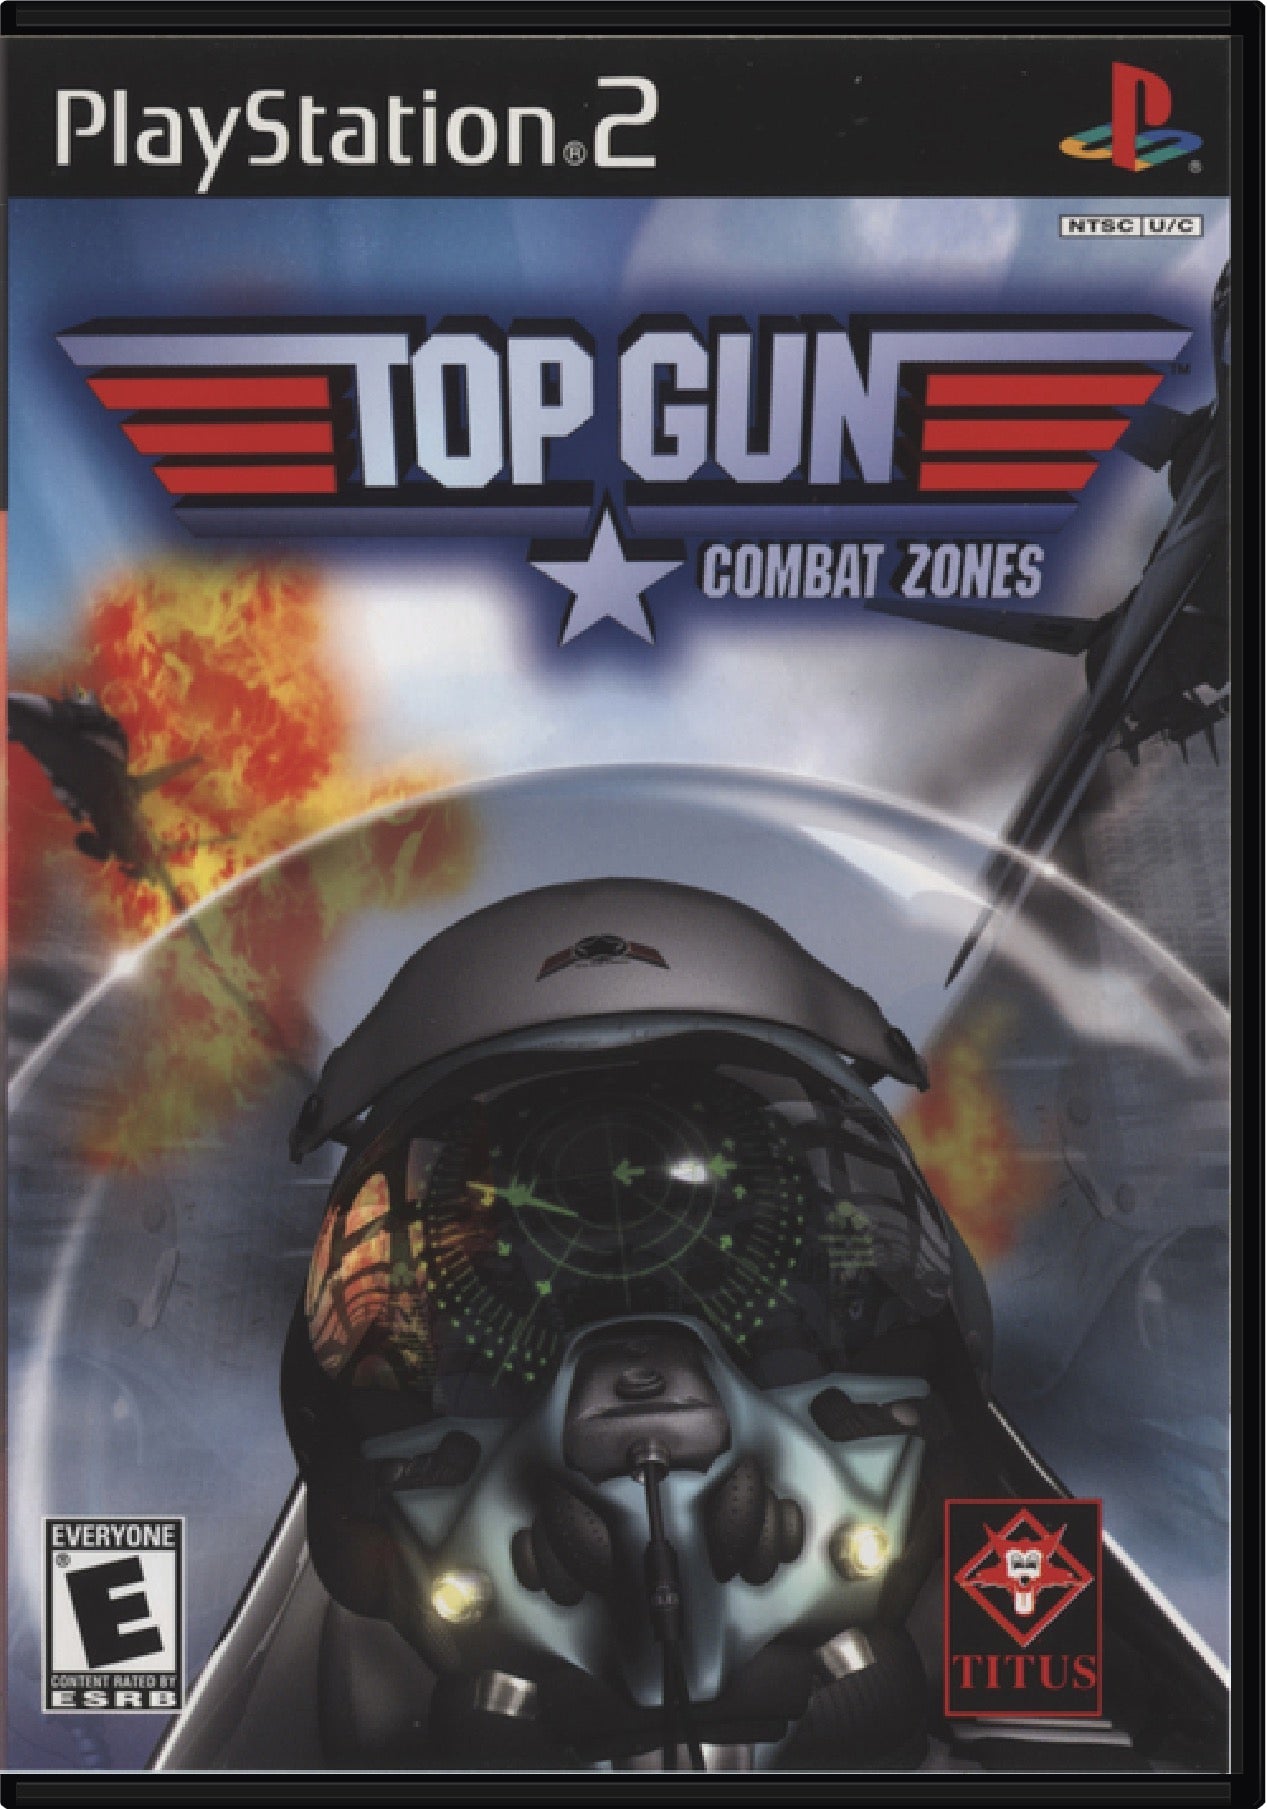 Top Gun Combat Zones Cover Art and Product Photo